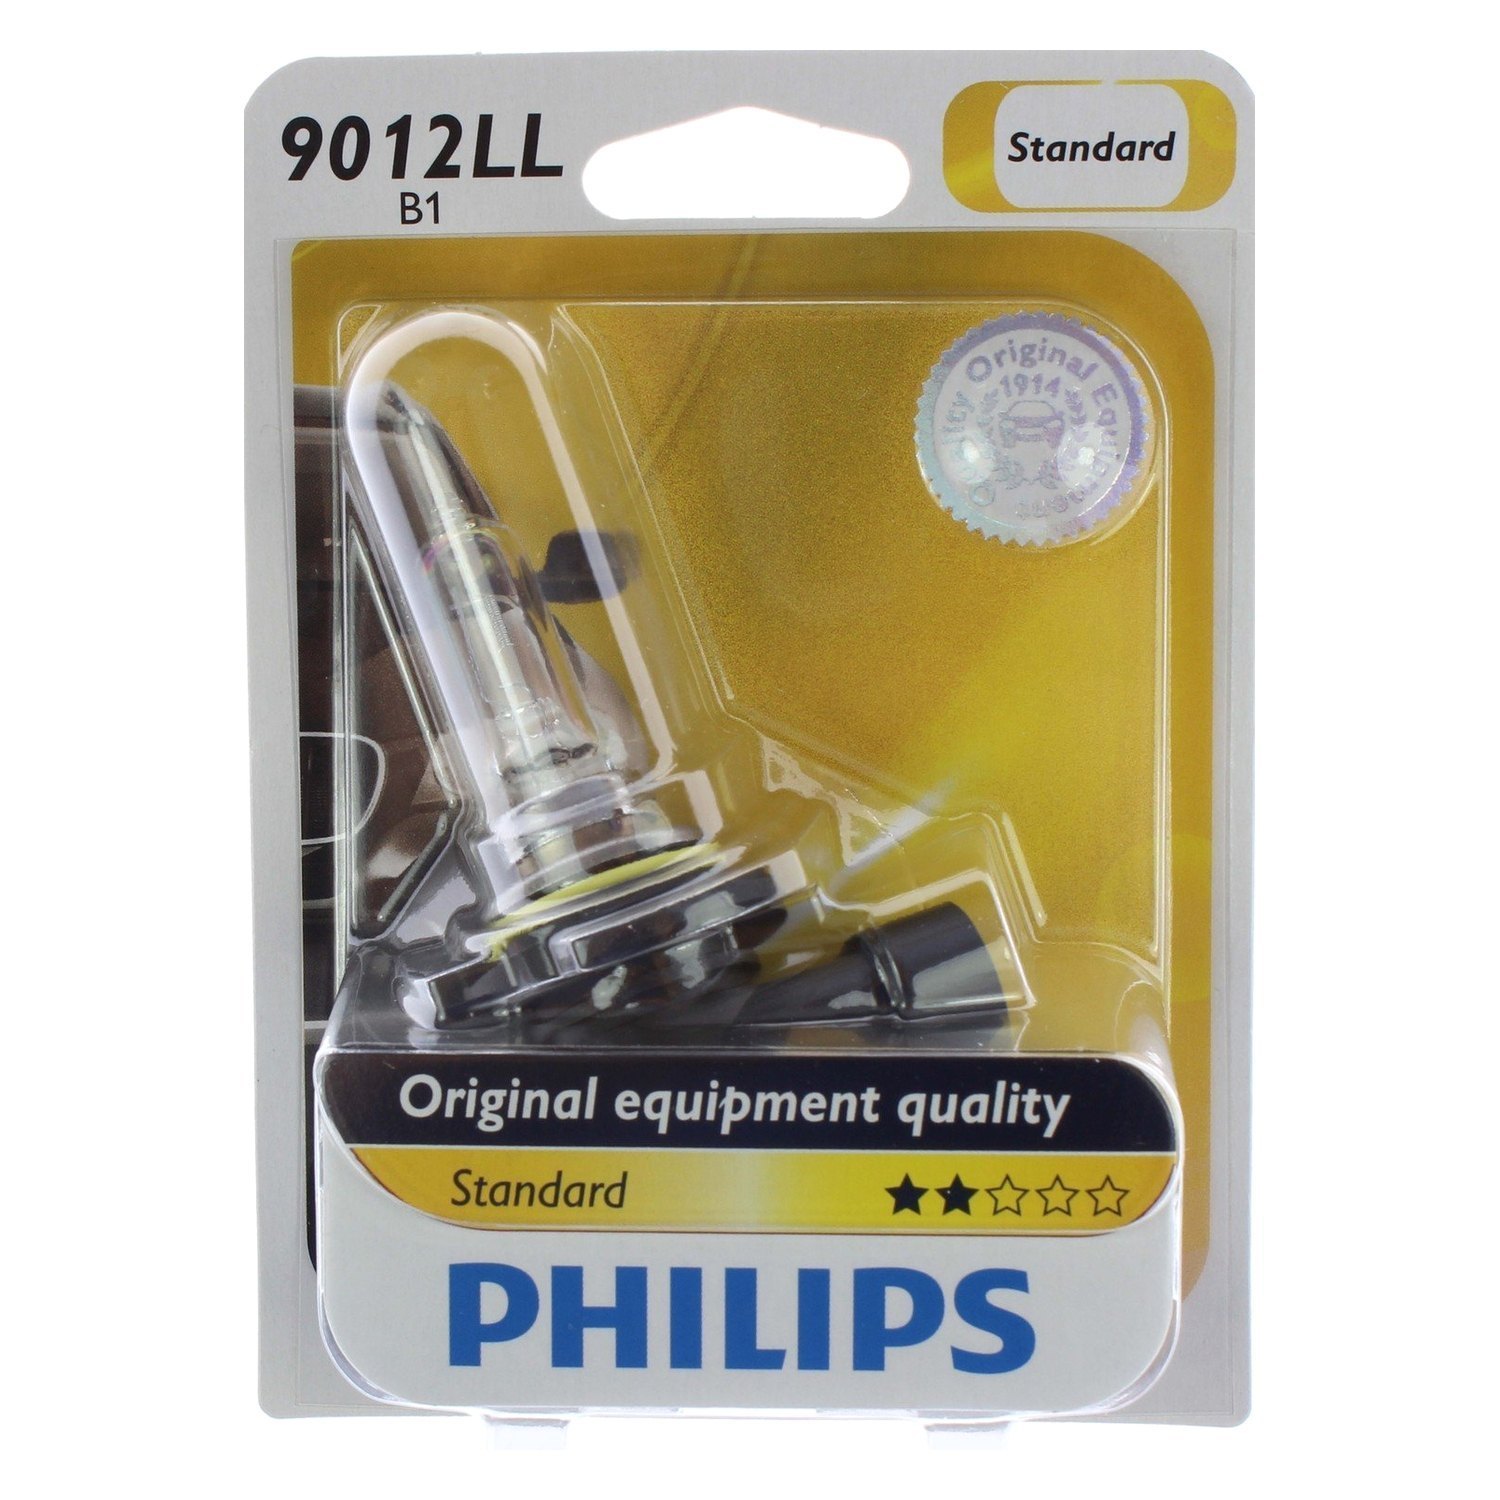 9012llc1 Philips. Автолампа Philips p-9012ll. Лампы Филипс Лонг Лайт 24 вольта. Фара Philips. Фара филипс